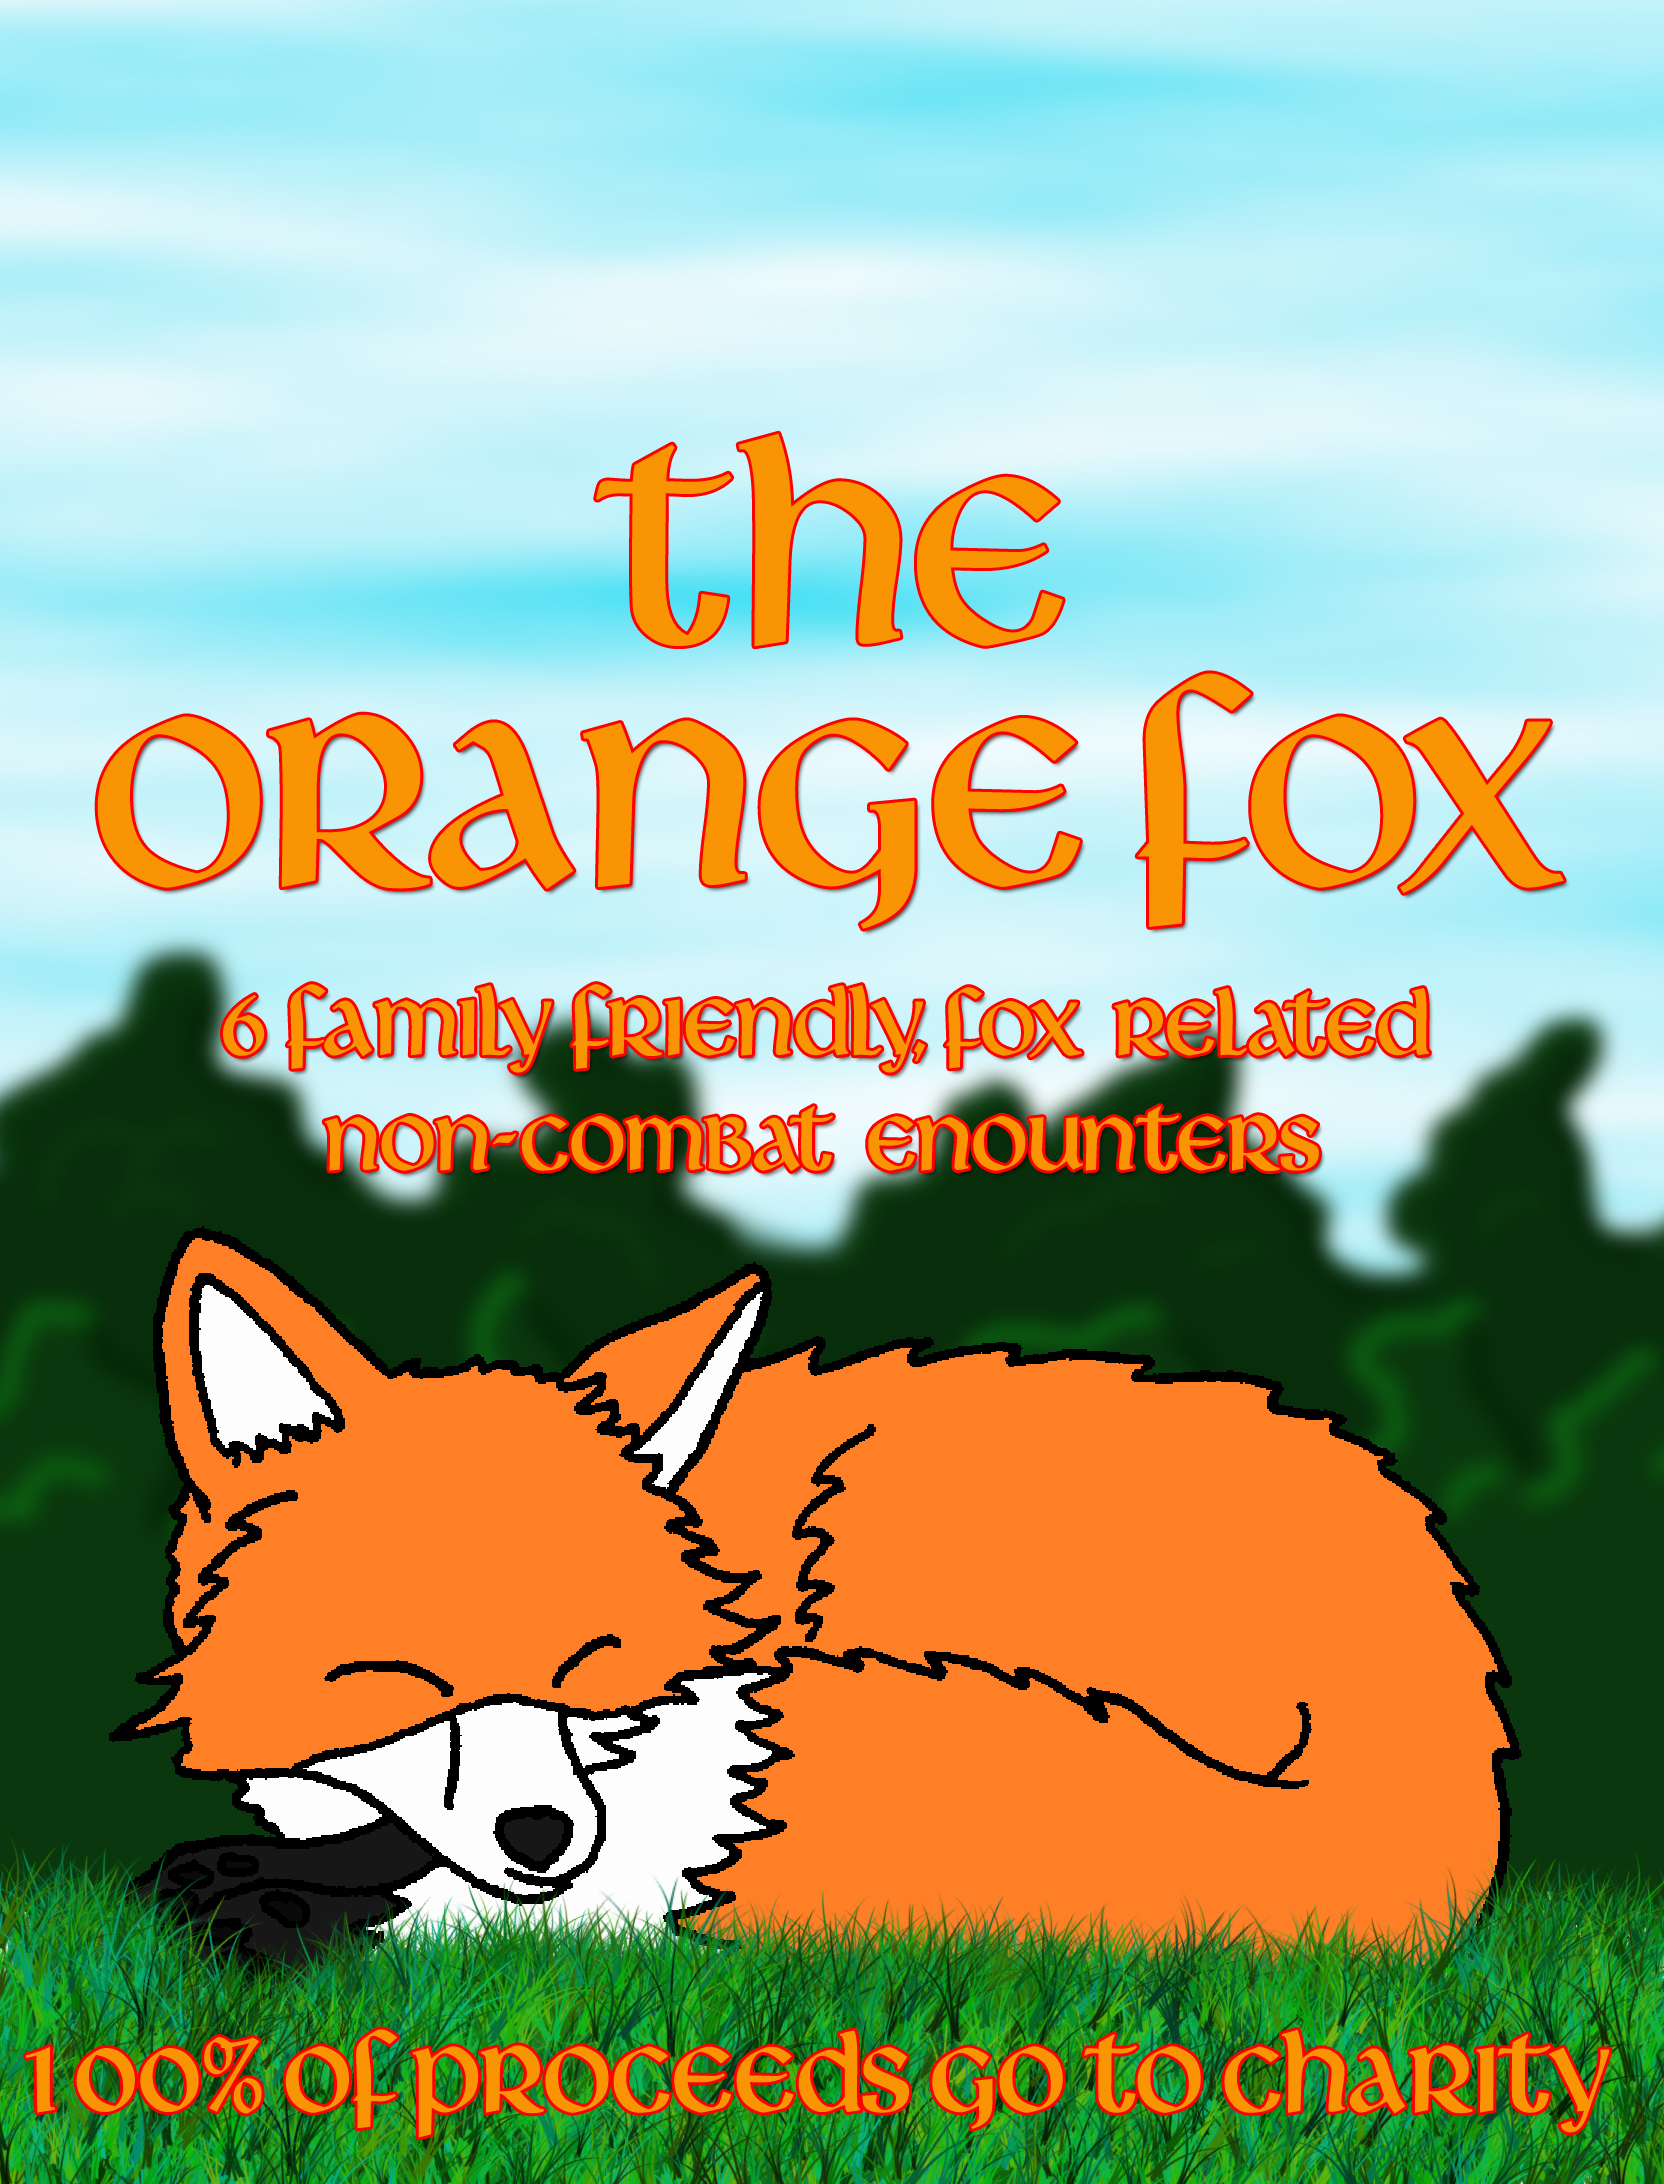 000 - The Orange Fox 900pix copy.jpg